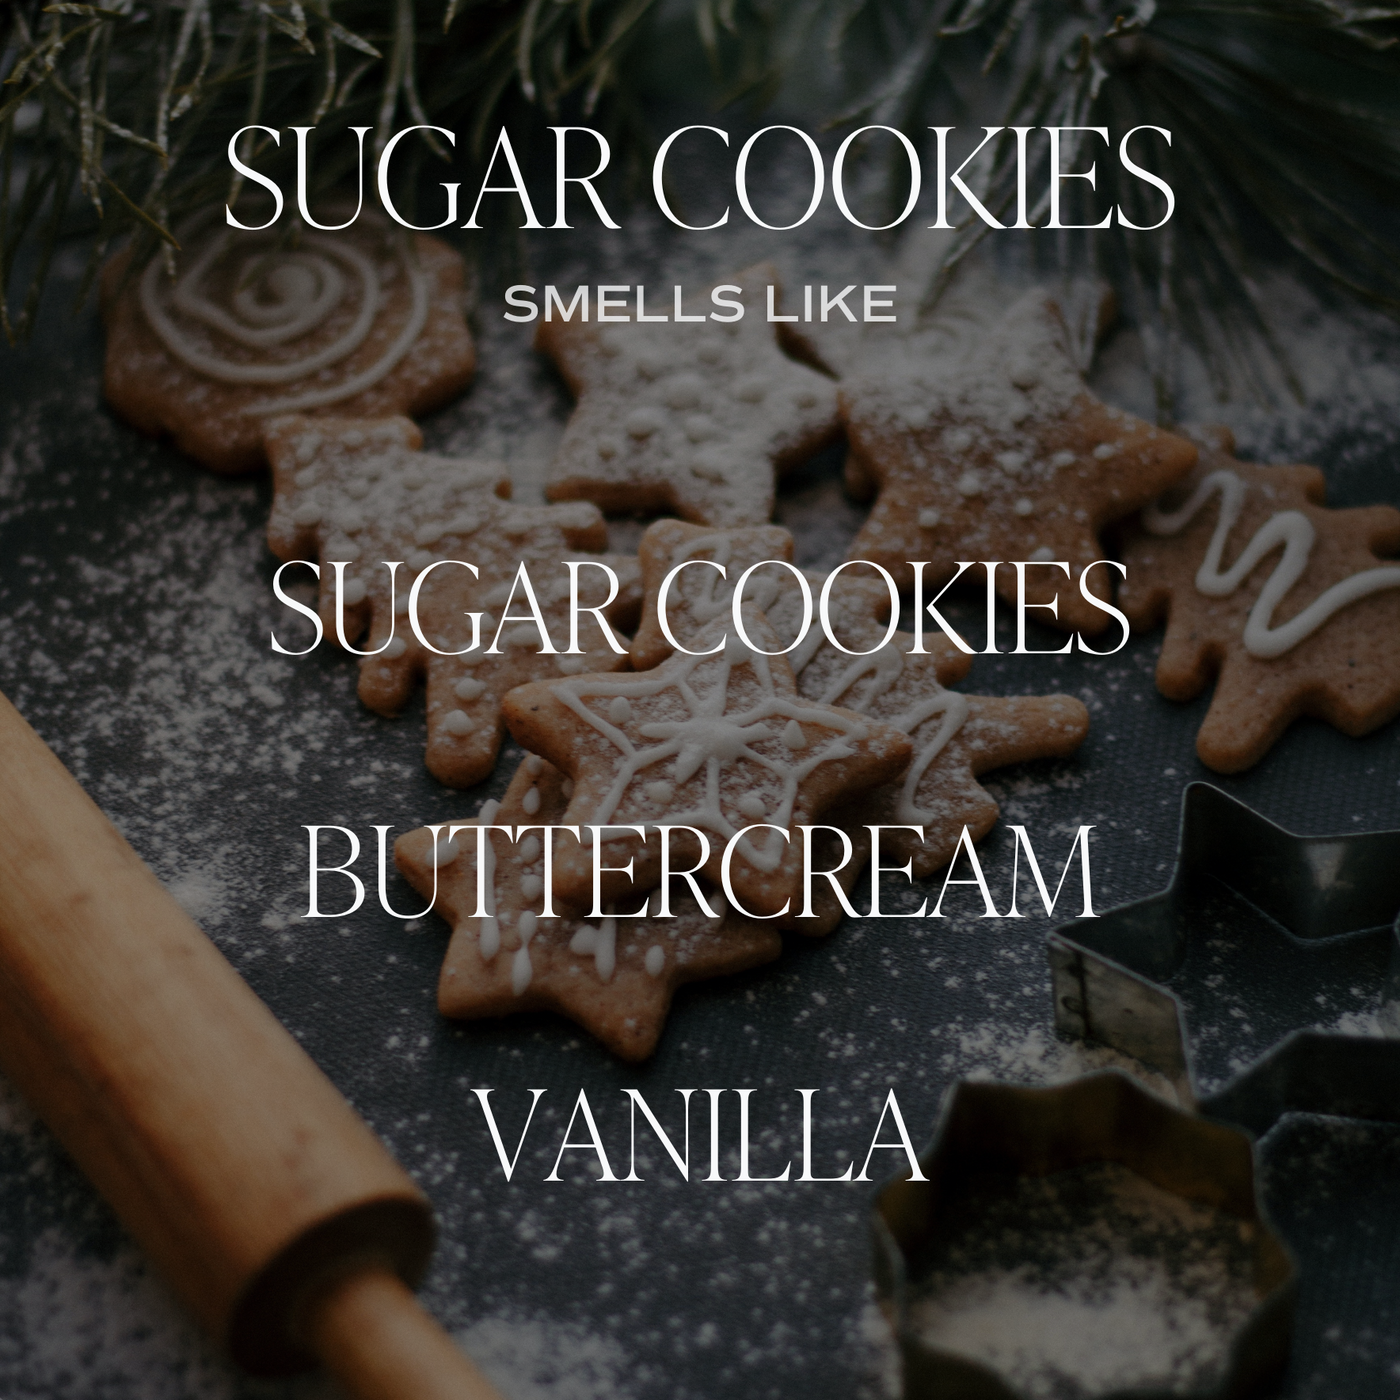 Sugar Cookies Soy Candle - Amber Jar - 9 oz